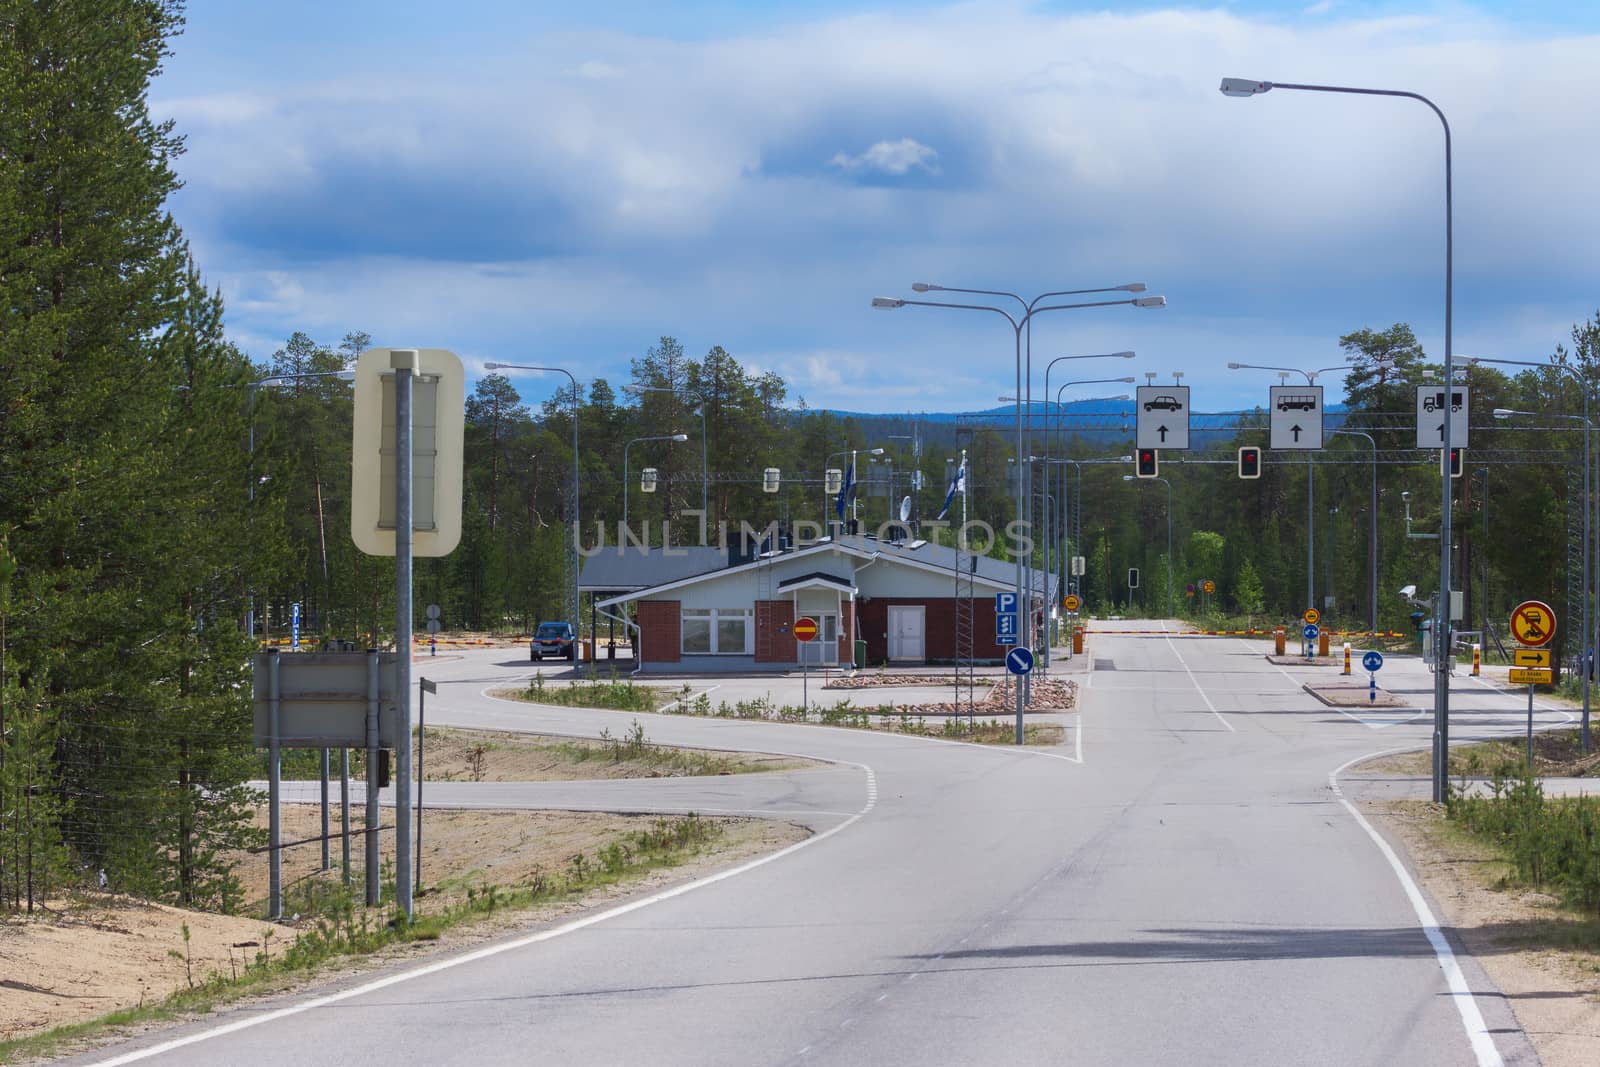 Raja-Joosepin Russian Border Crossing in Lapland, Finland. by Claudine